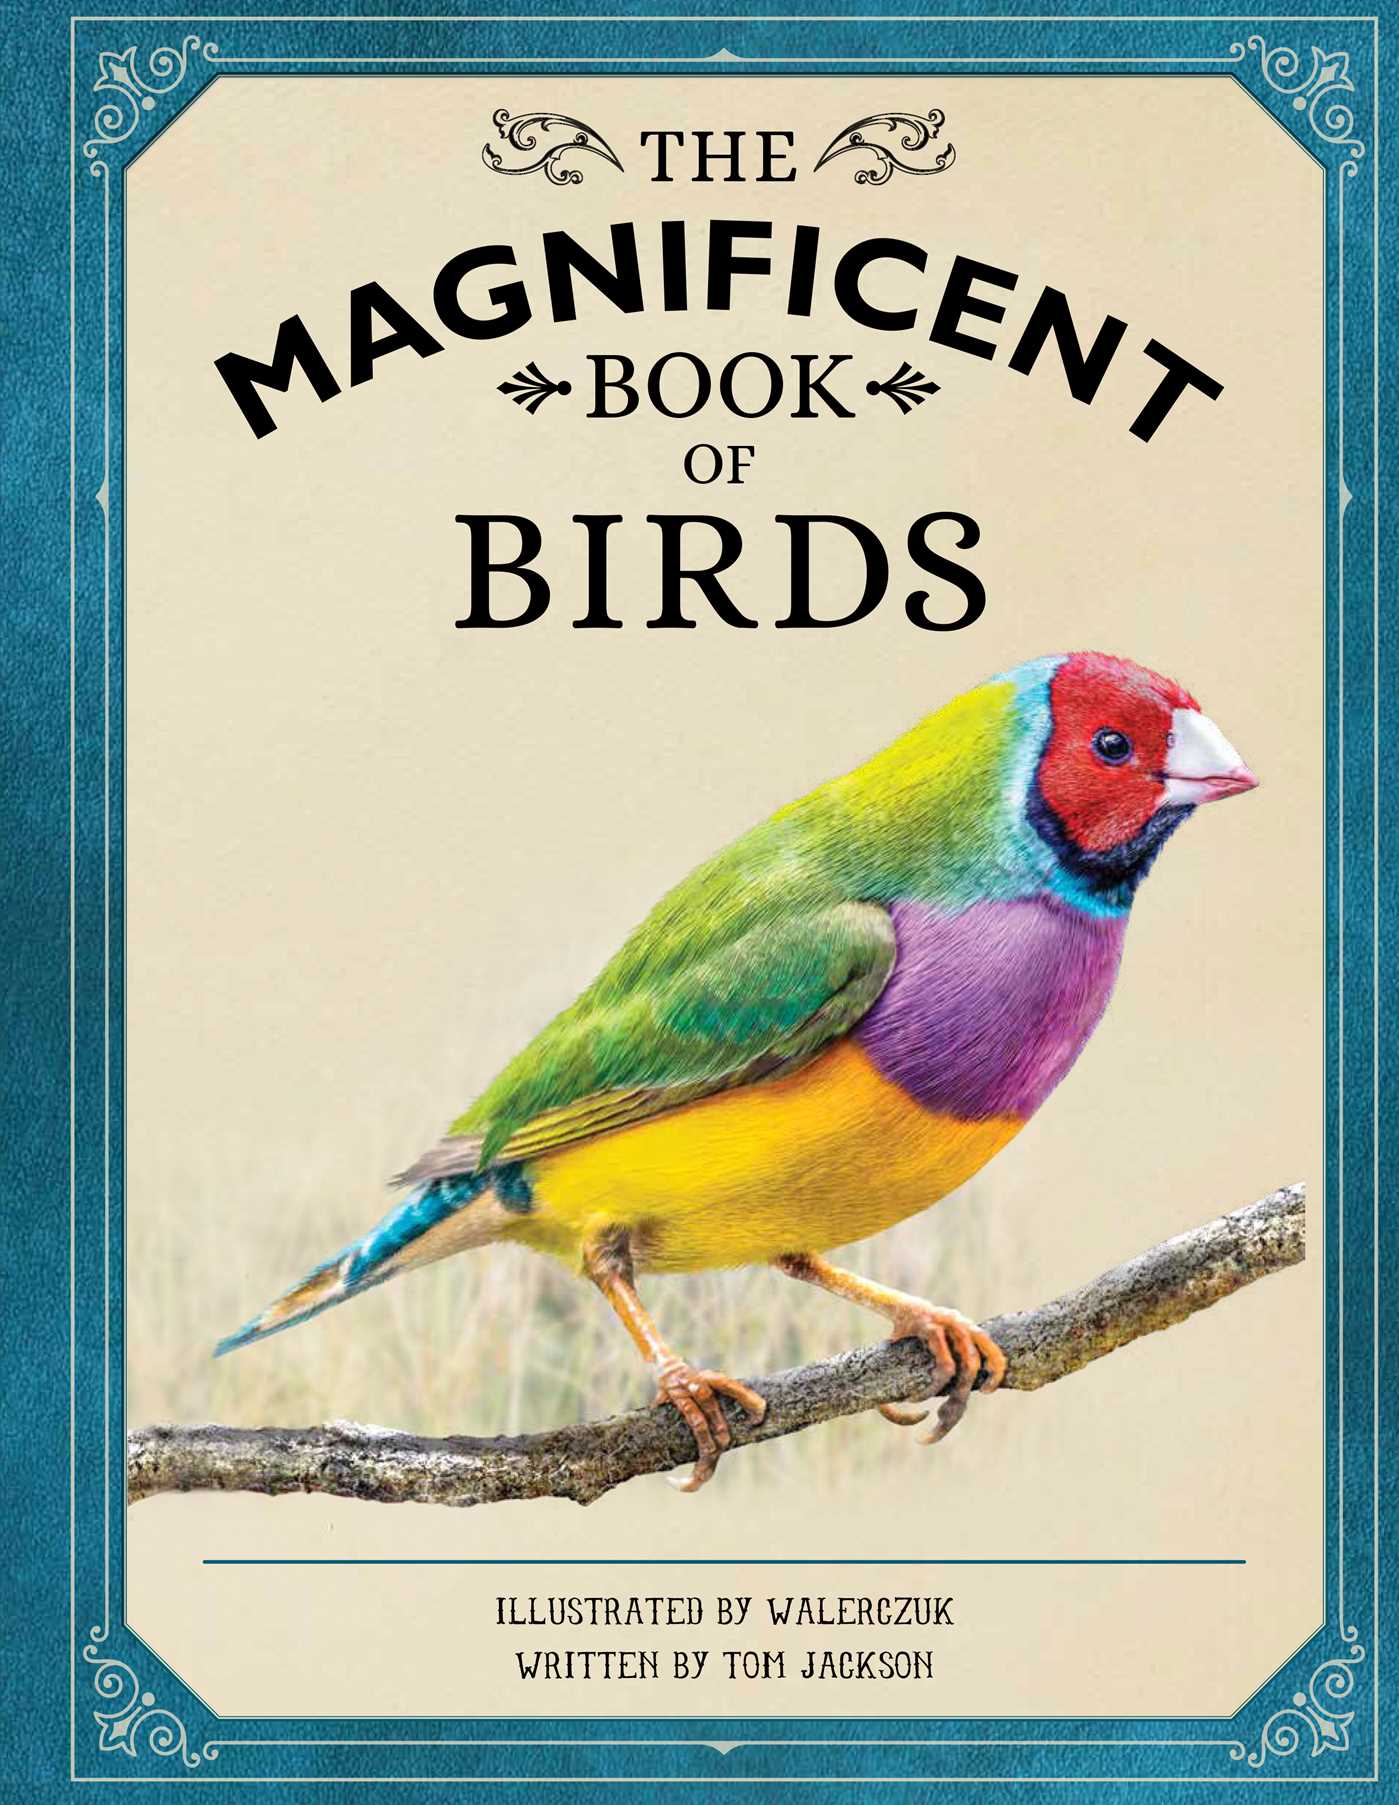 The Magnificent Book of Birds | Weldon Owen